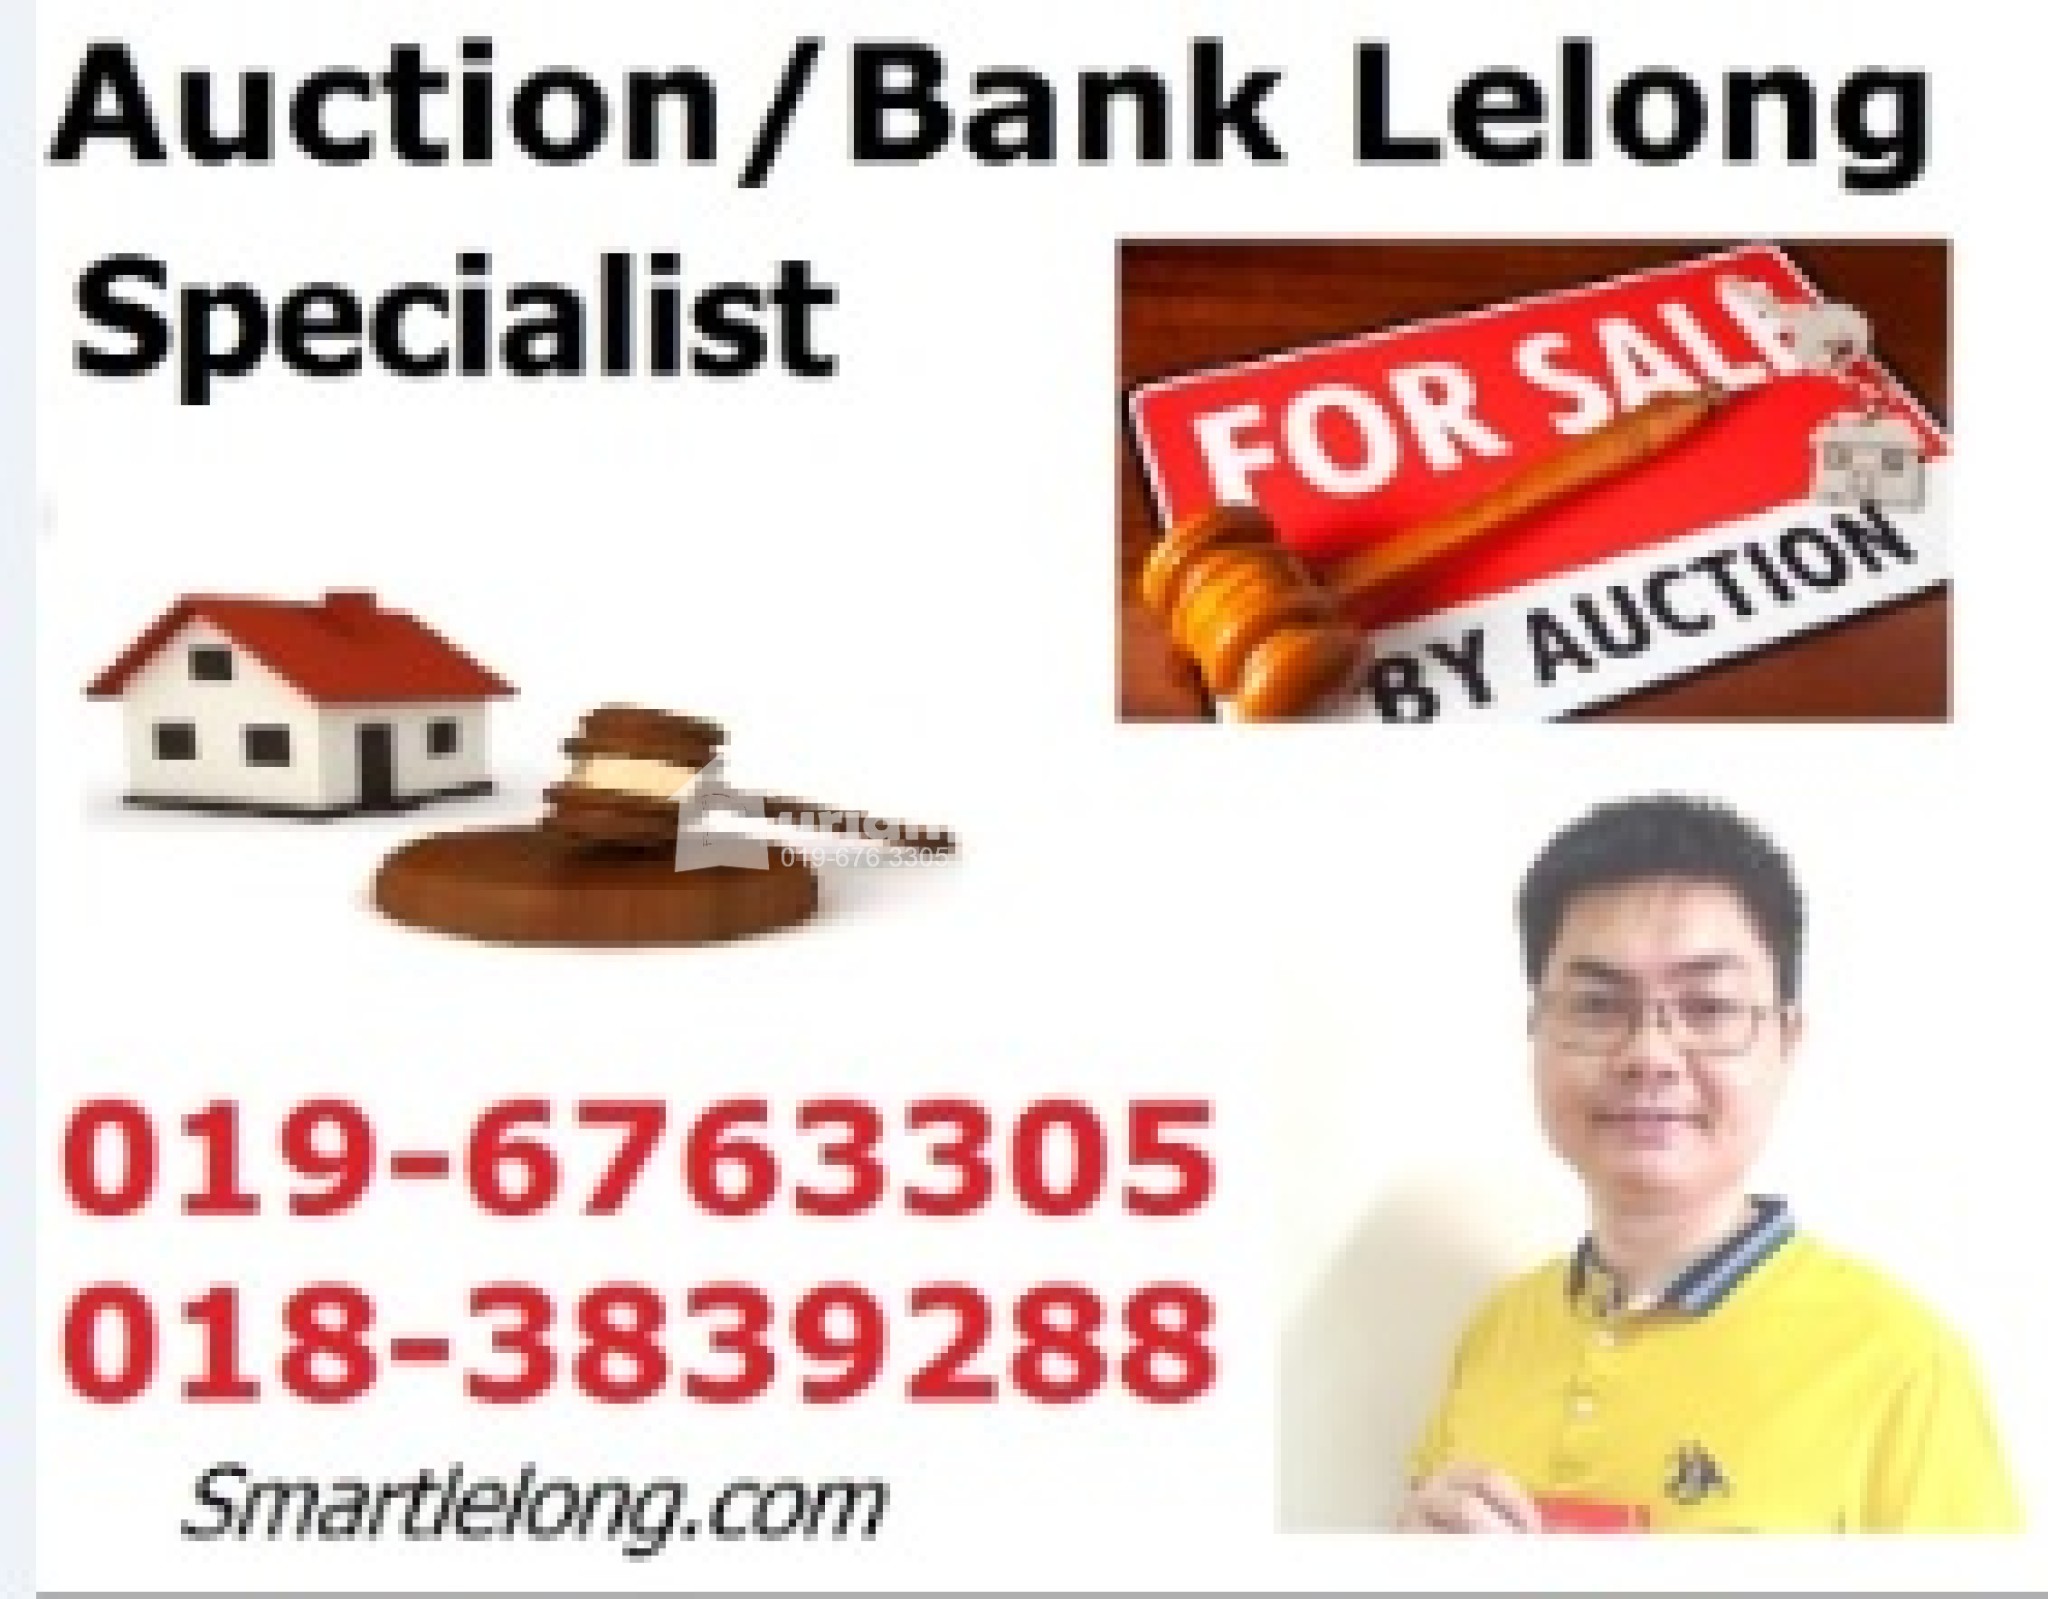 Terrace House For Auction at Bandar Barat